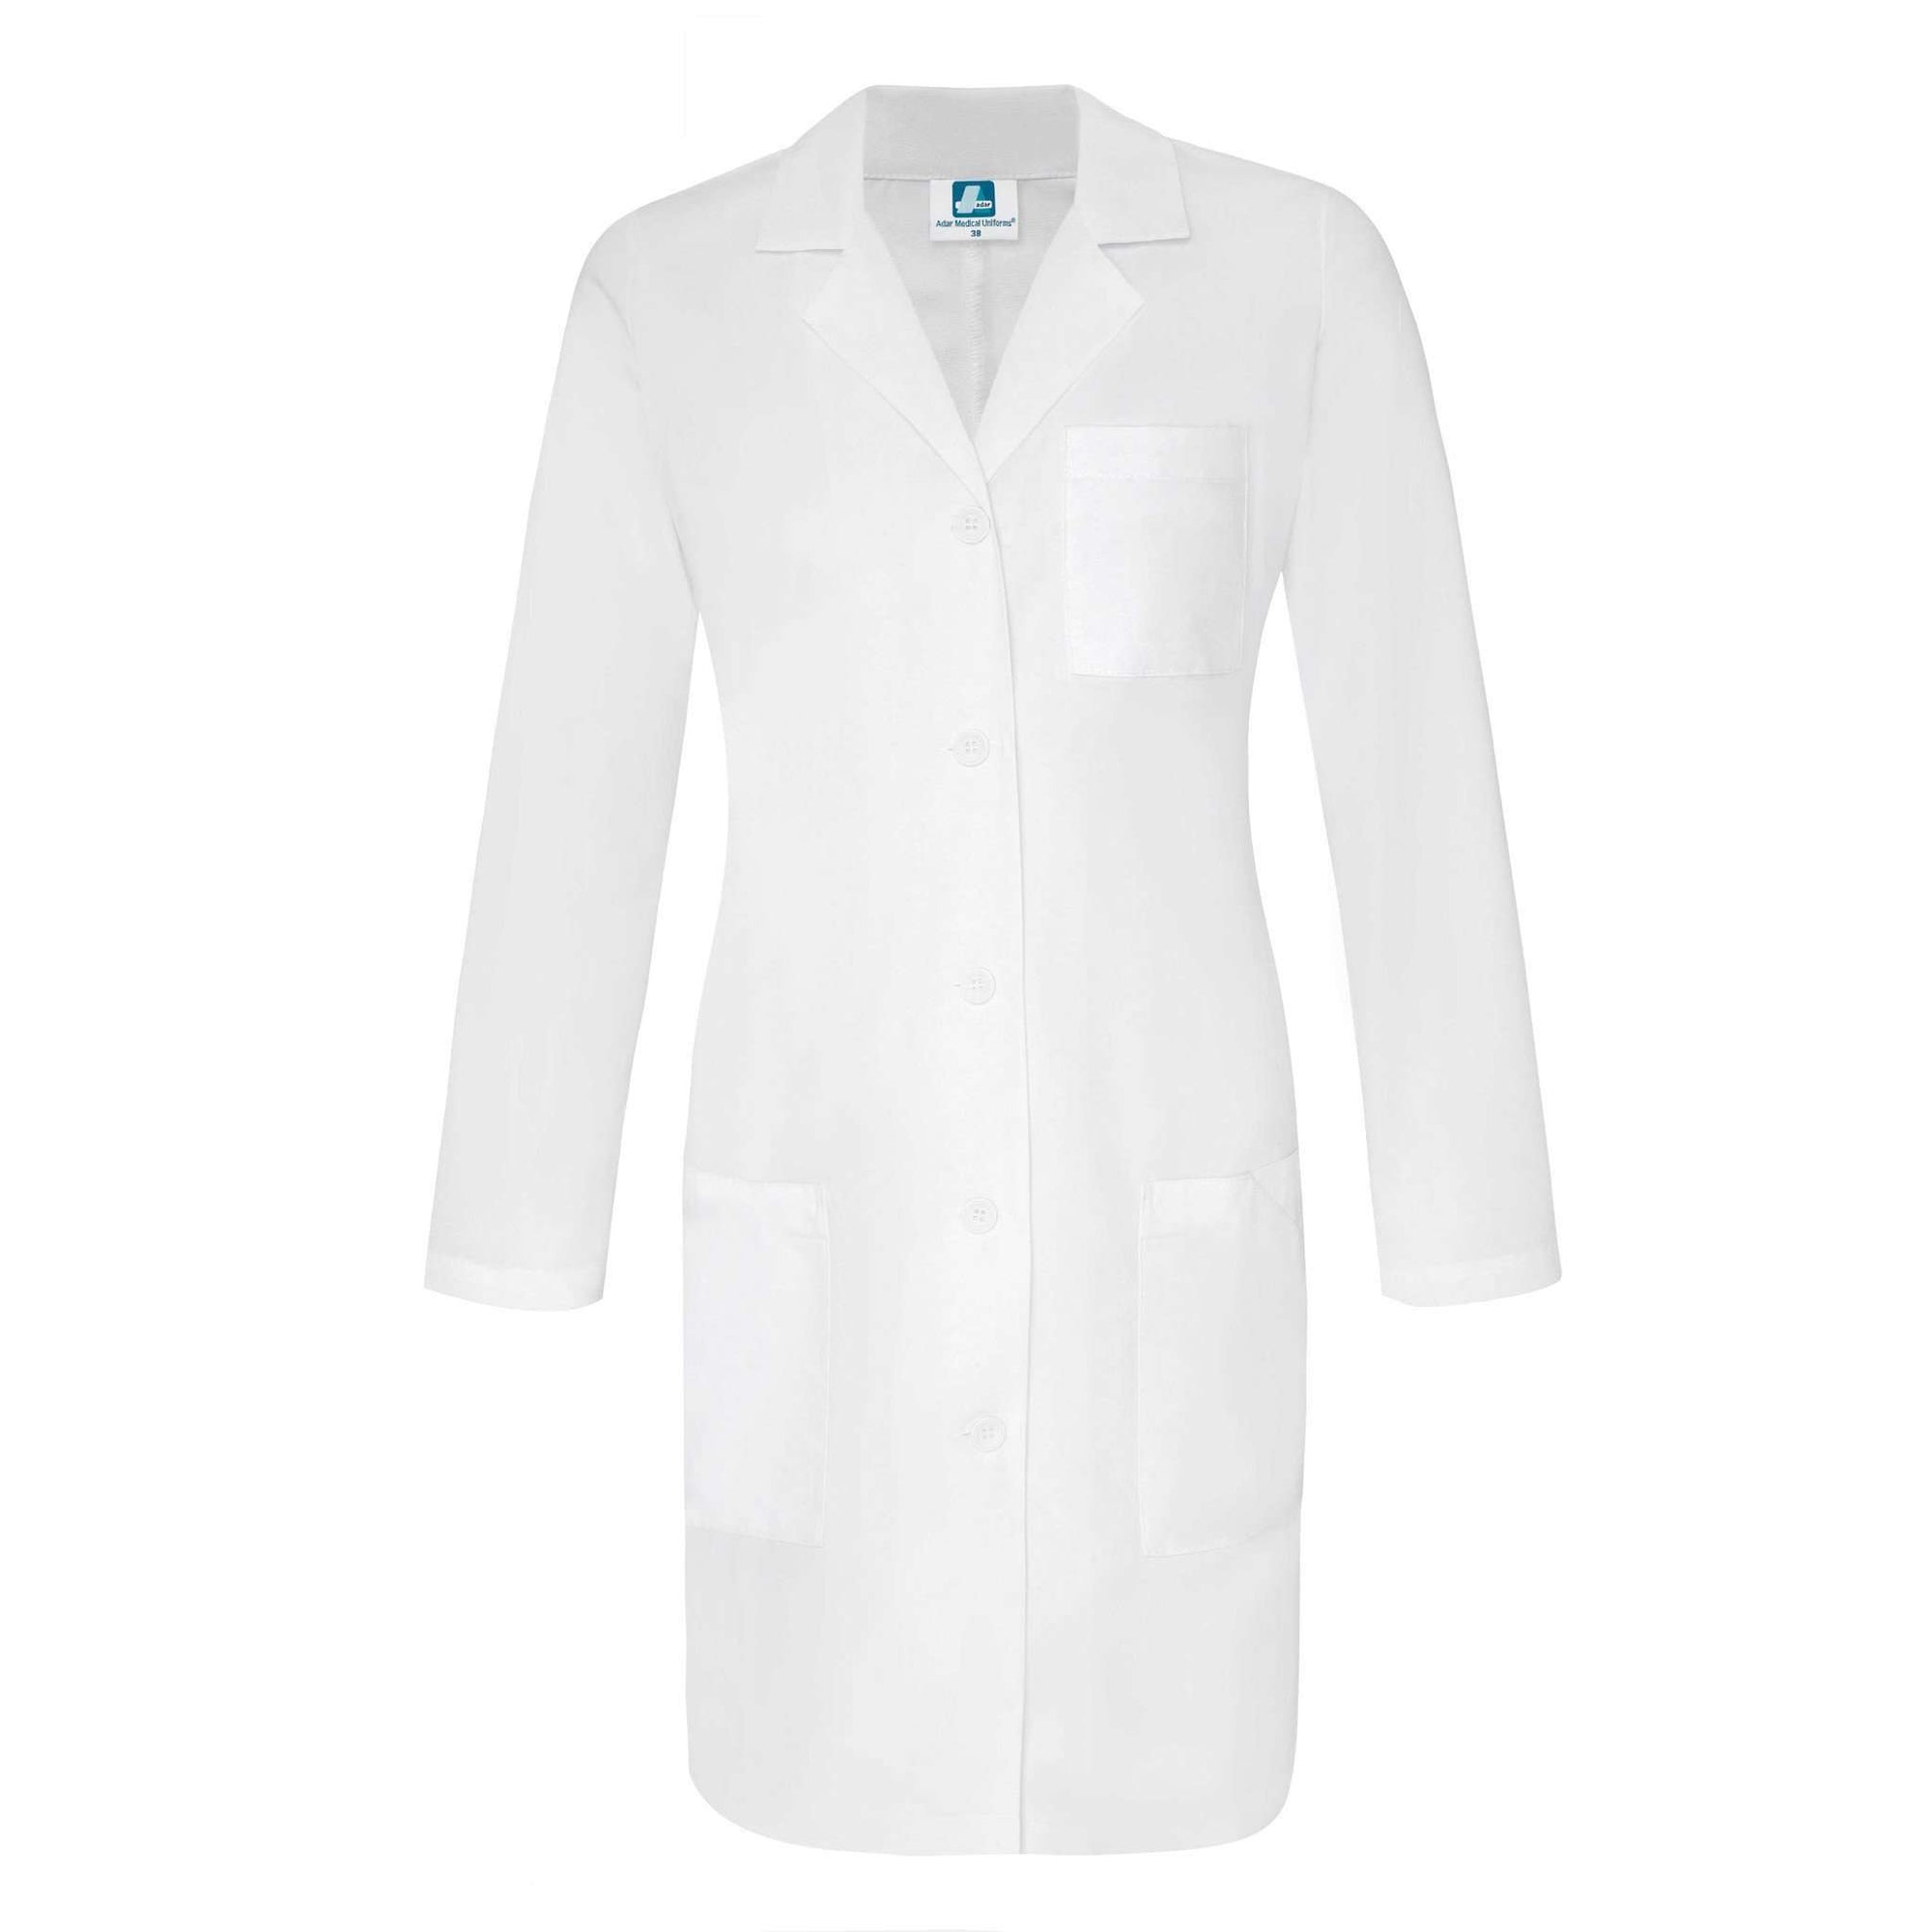  Adar - uniforms Medical Uniform Lab Coats uniforms online Adar Universal 36" Womens Slim-Fit Lab Coat - SchoolUniforms.com